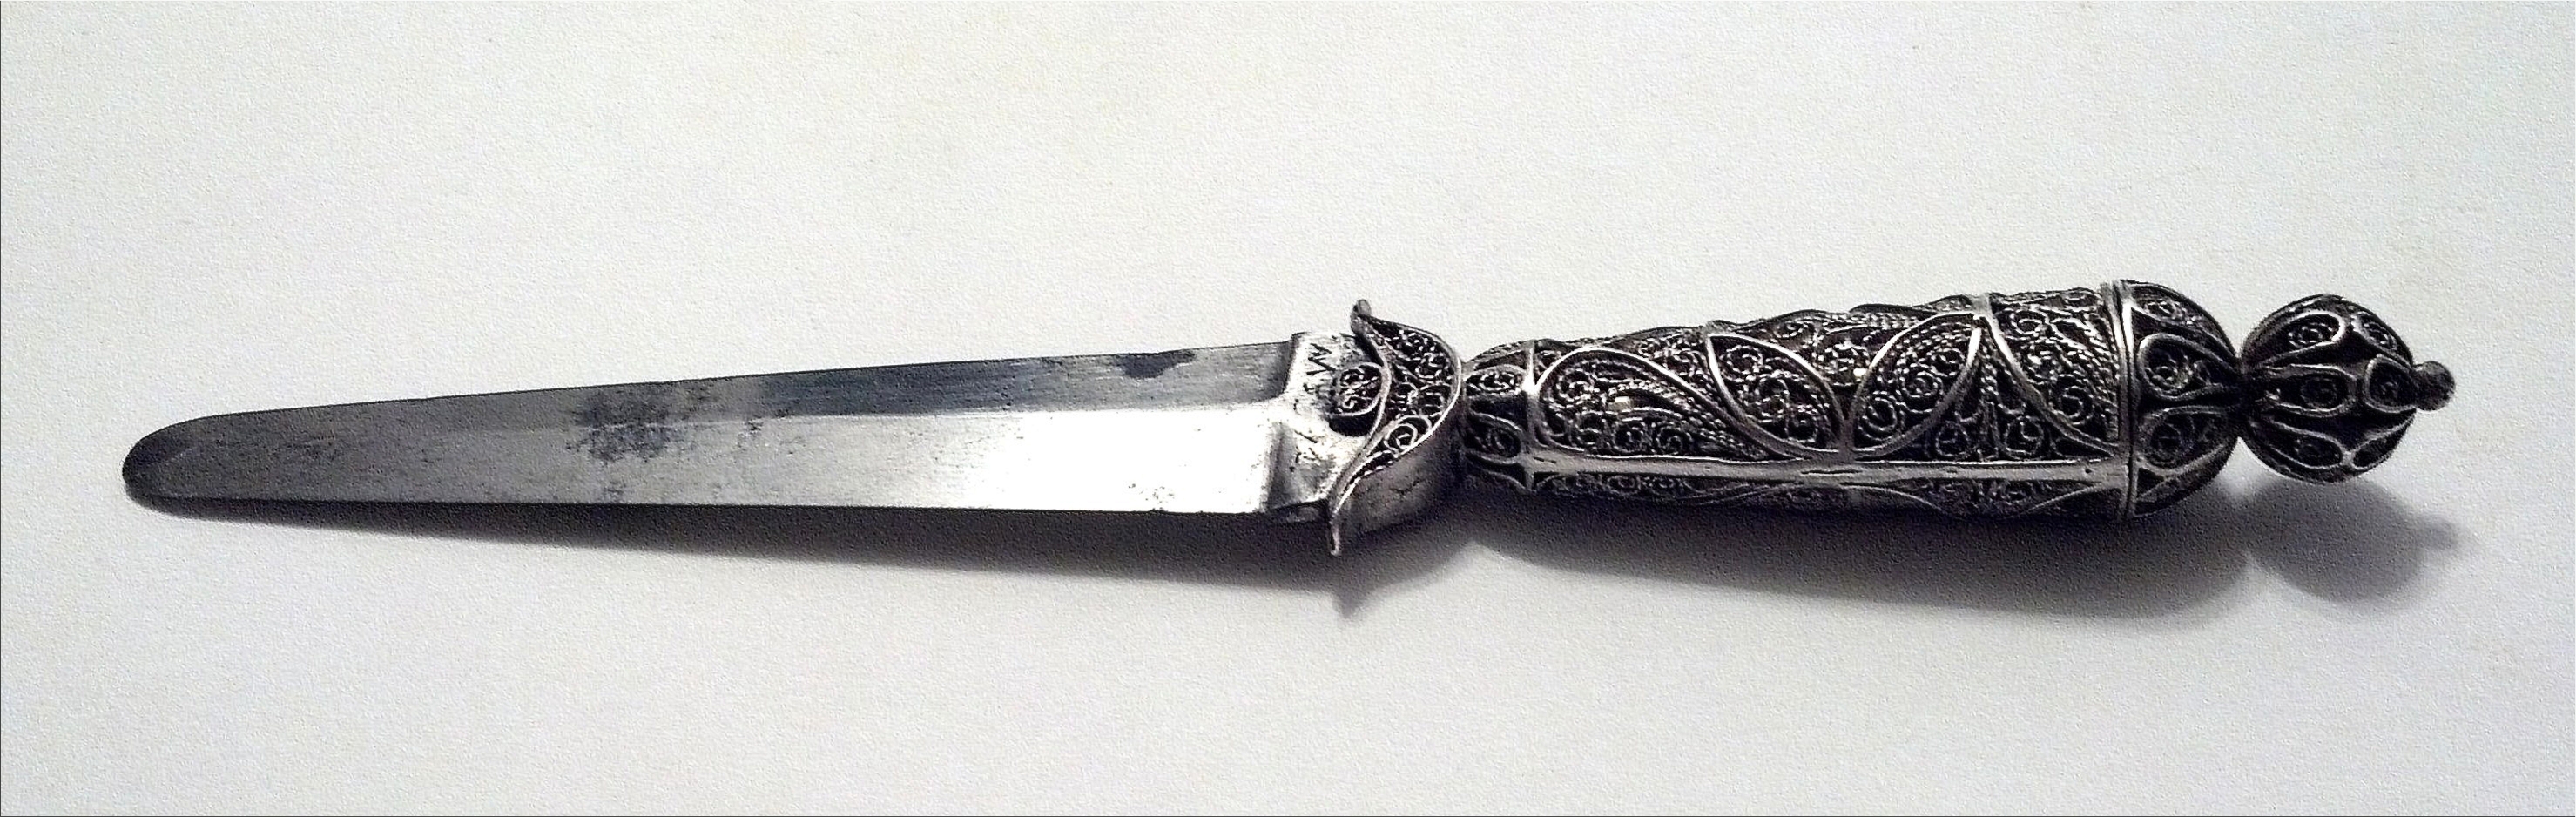 Circumcision knife filigree
                18th century